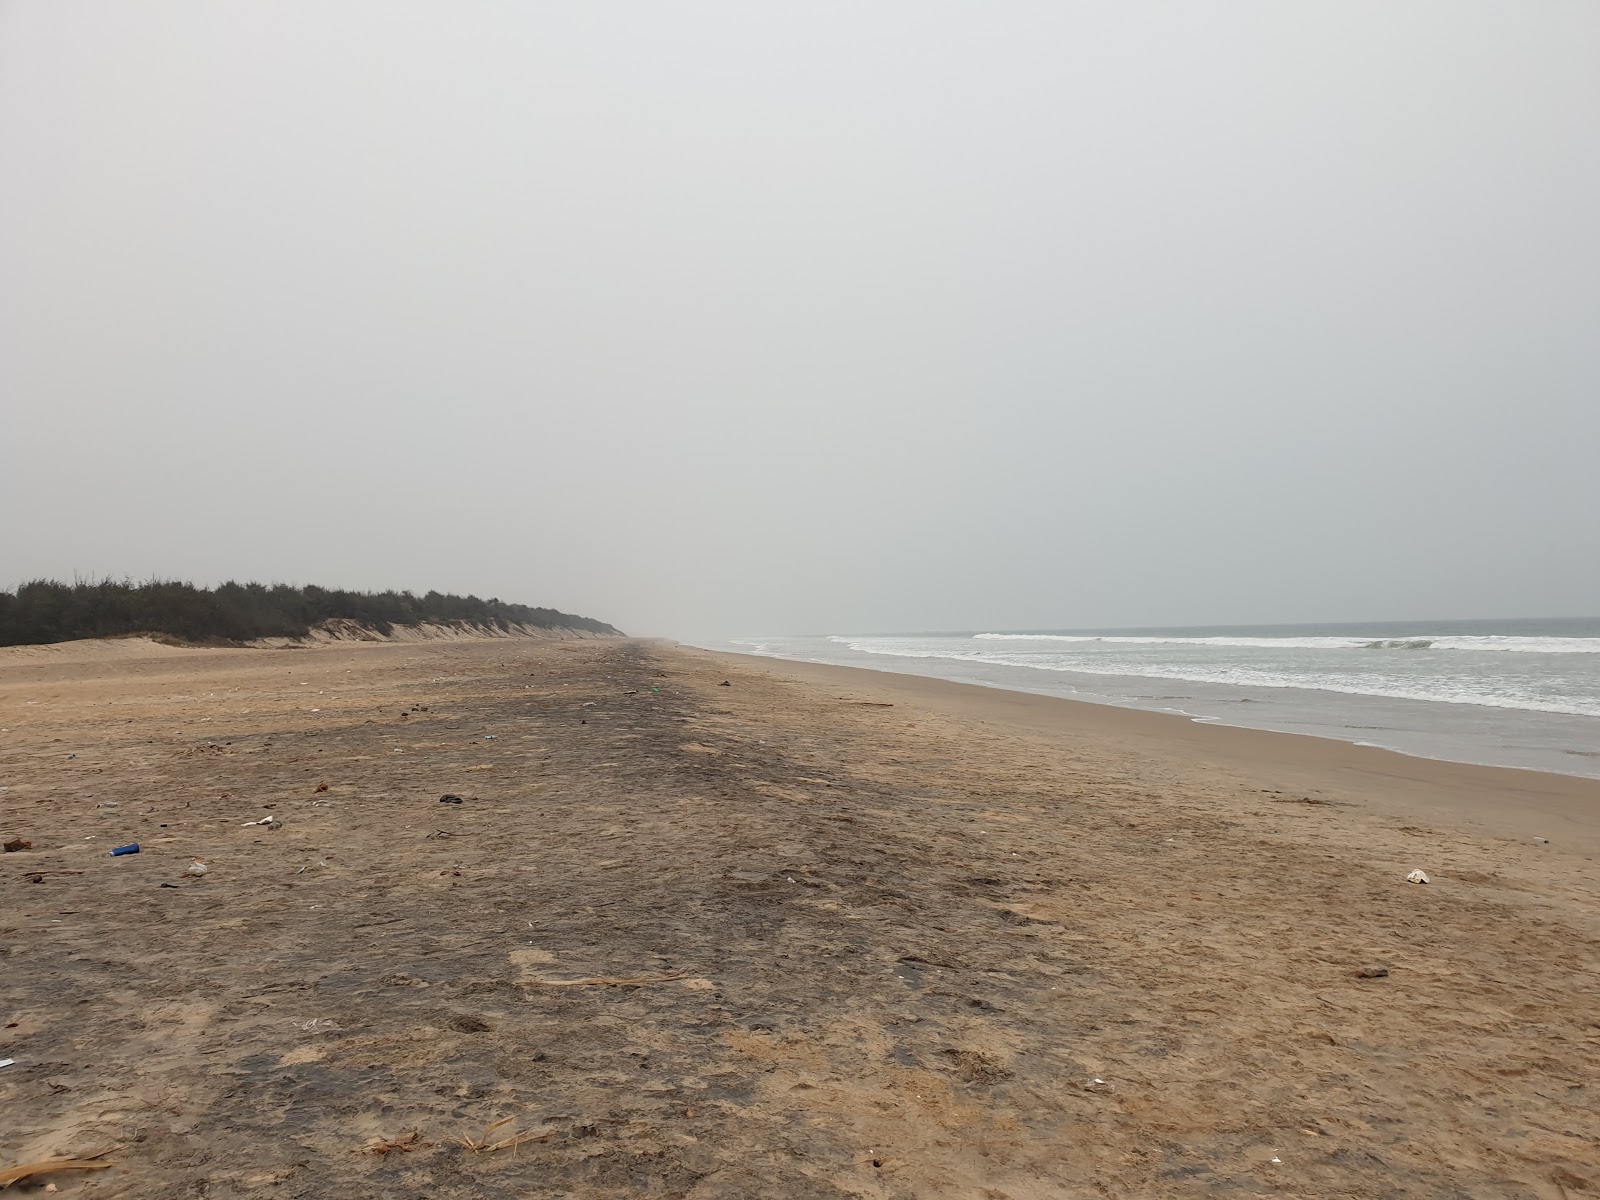 Photo de Kaviti Rangala Gadda Beach situé dans une zone naturelle